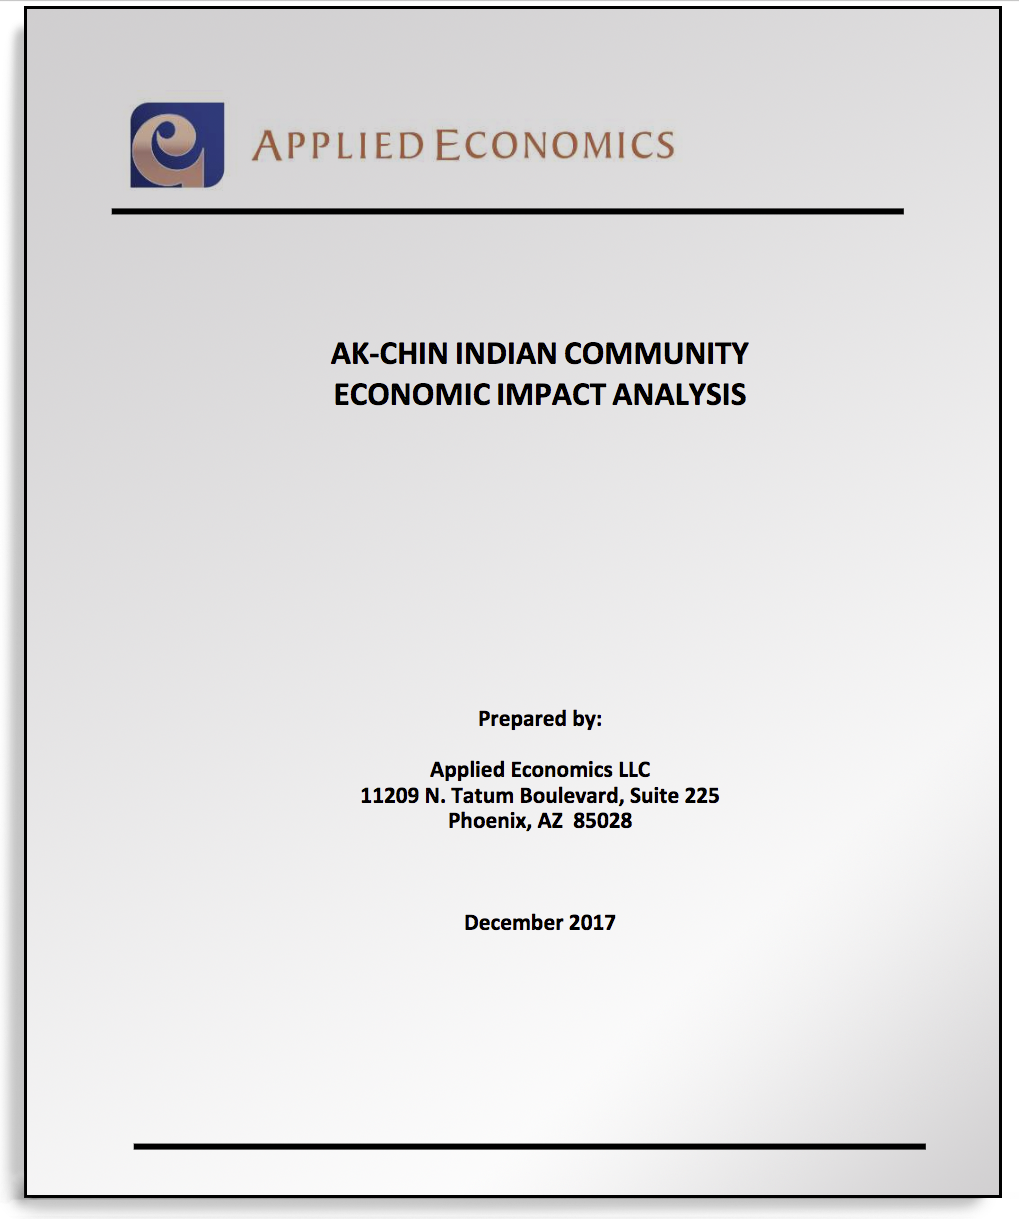 acic-econ-impact-analysis